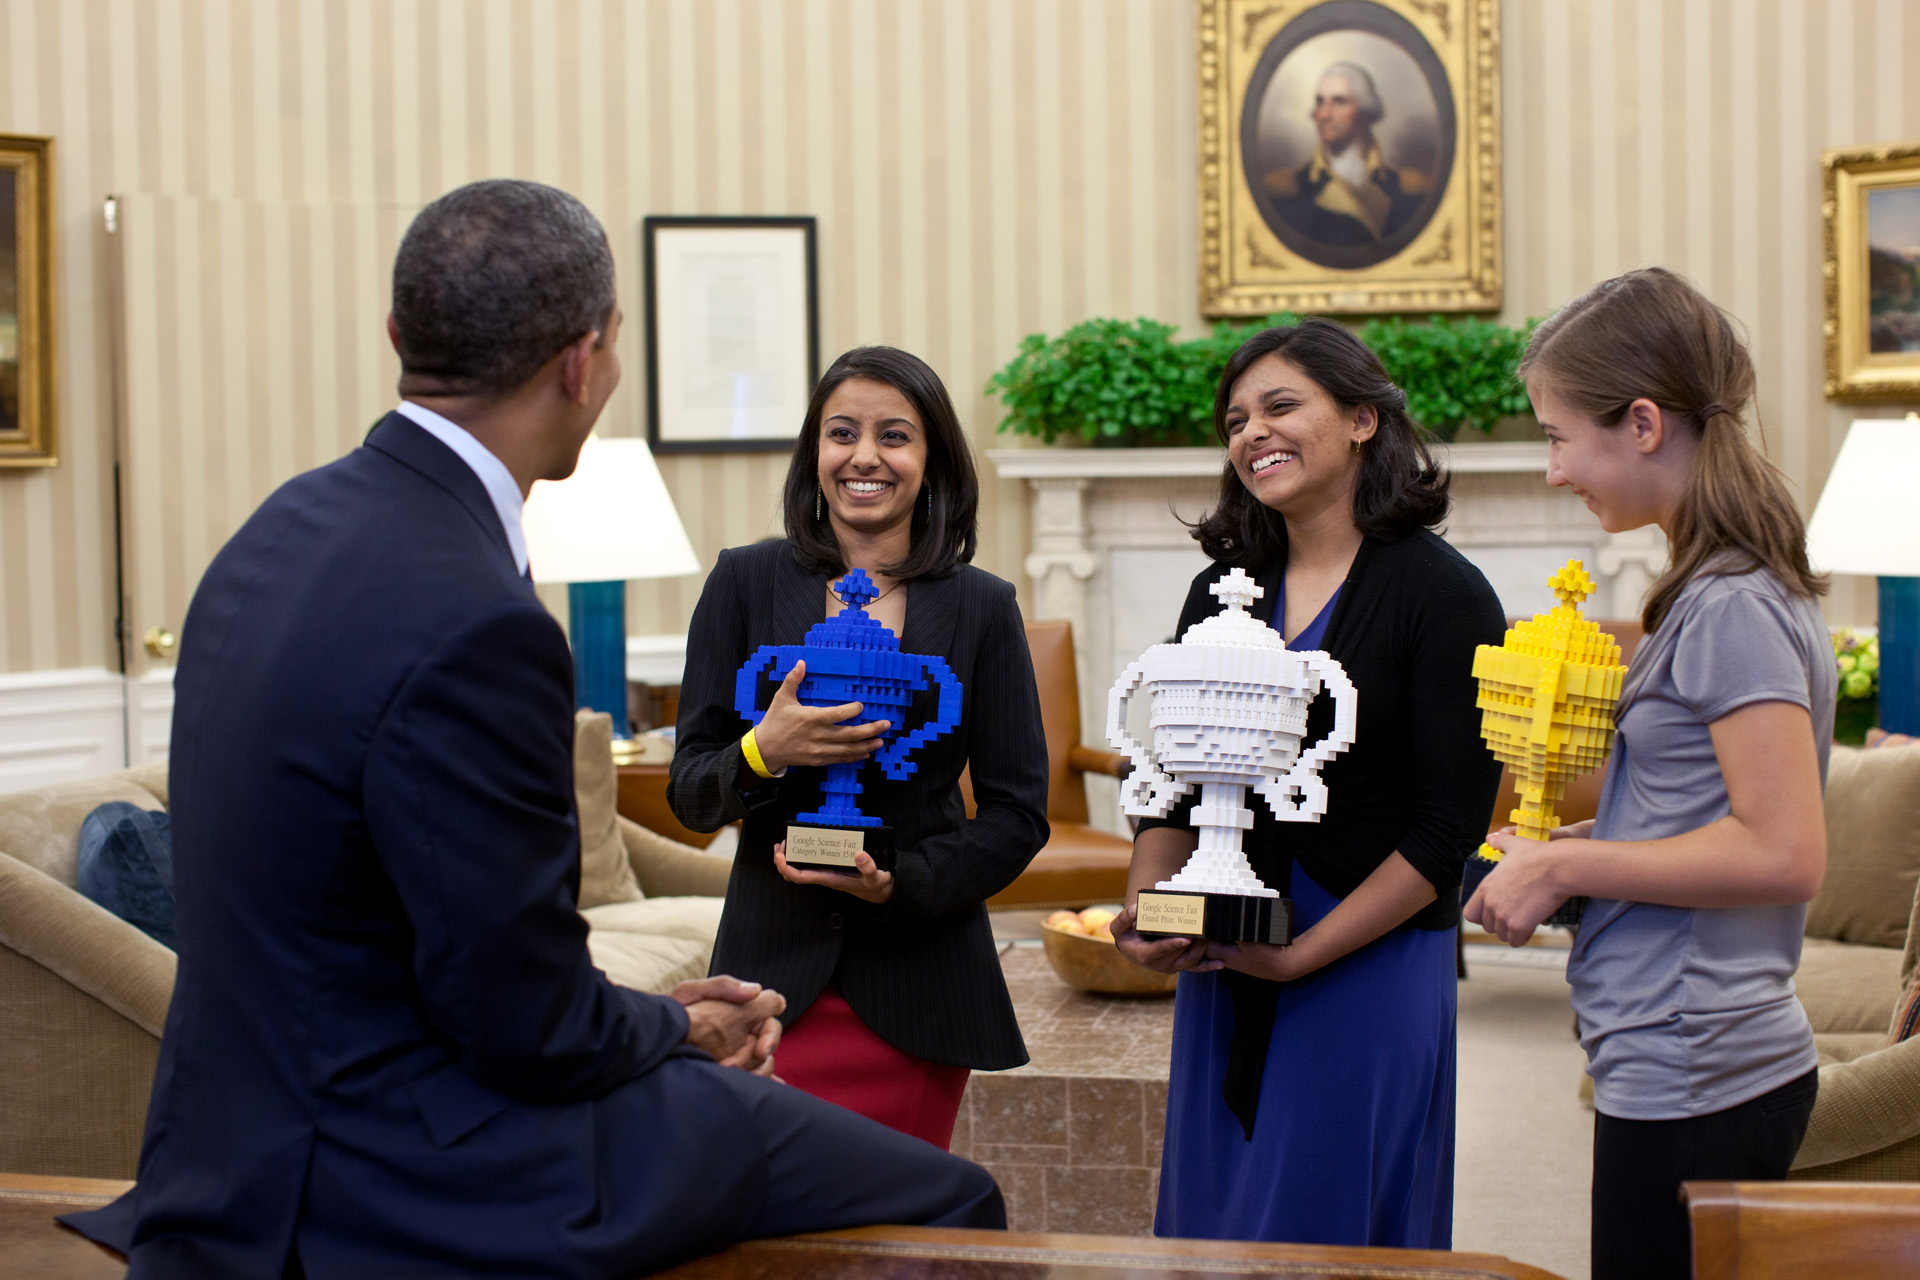 President Obama Congratulates Google Science Fair Winners